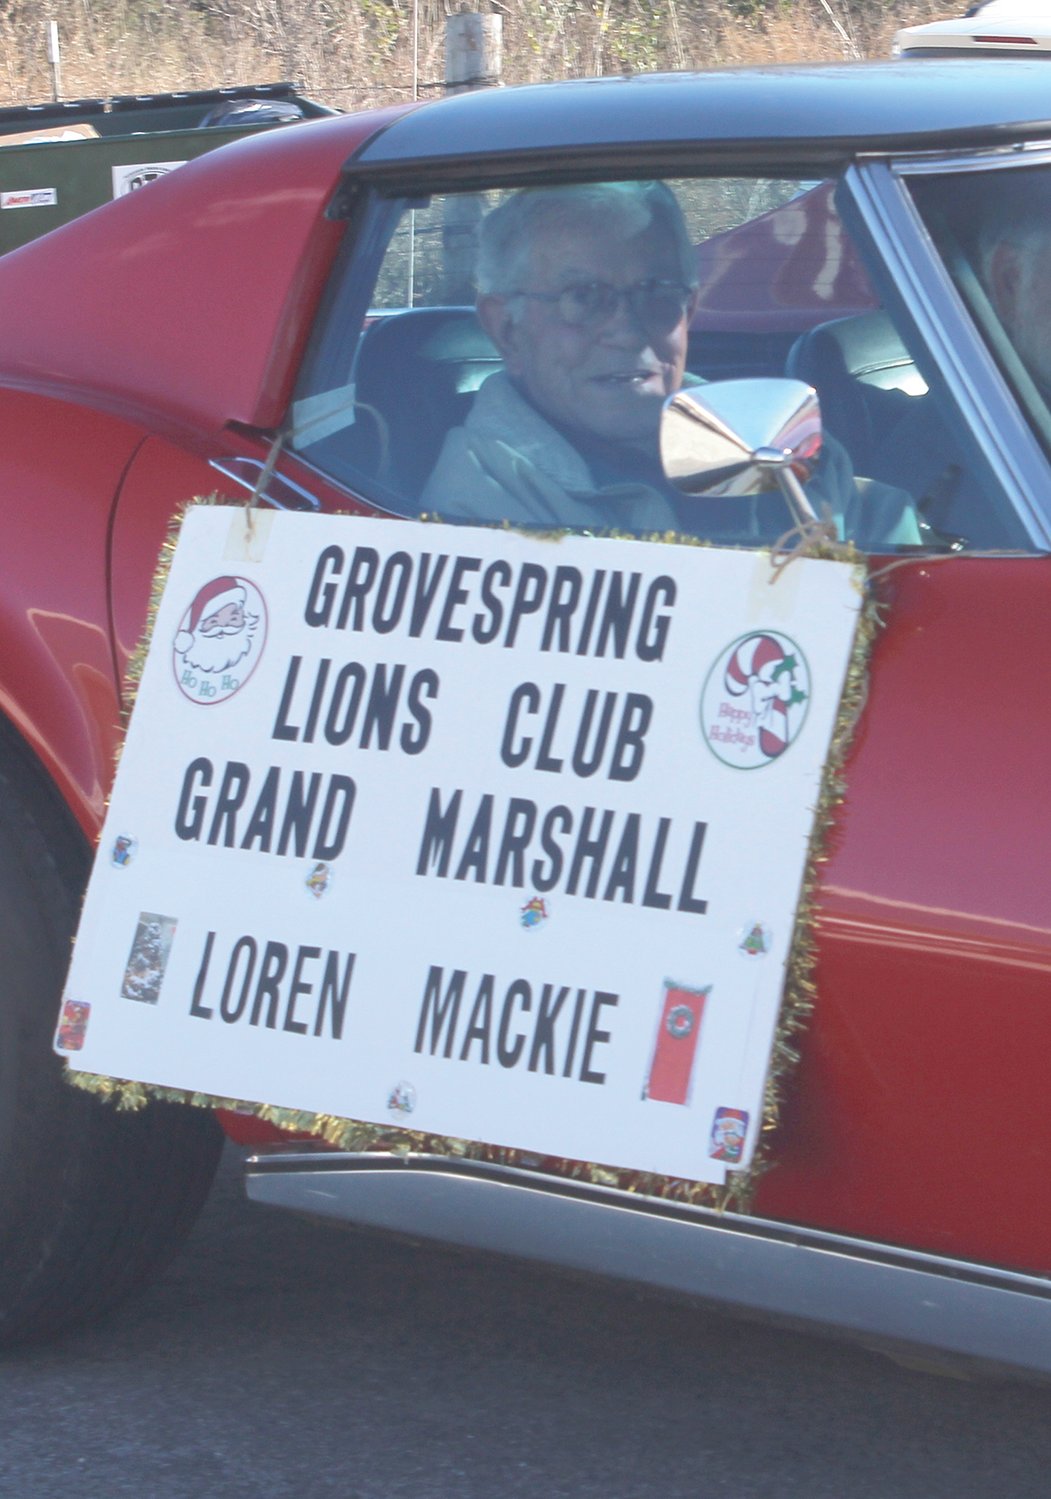 Grovespring Lions Club Grand Marshal Loren Mackie.